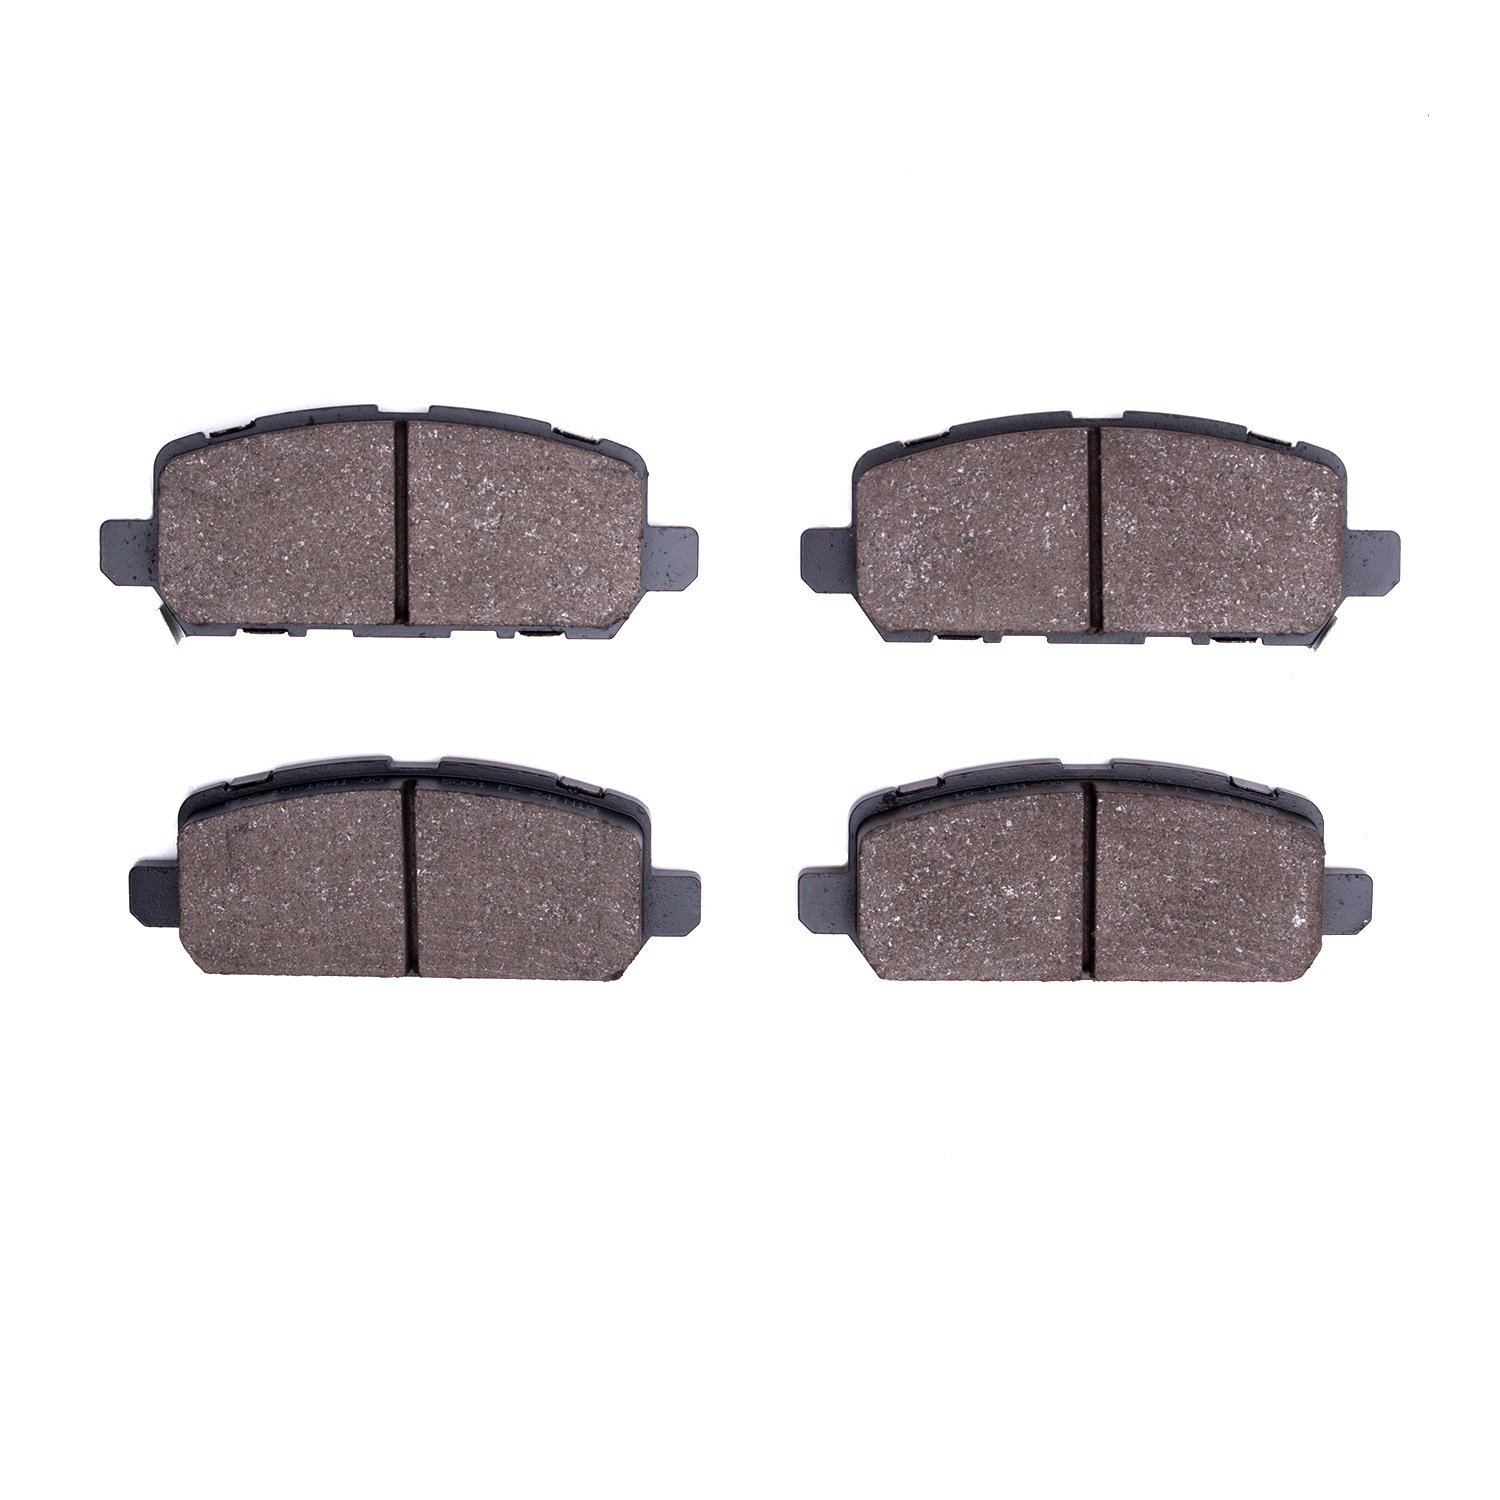 Ceramic Brake Pads, Fits Select Acura/Honda, Position: Rear